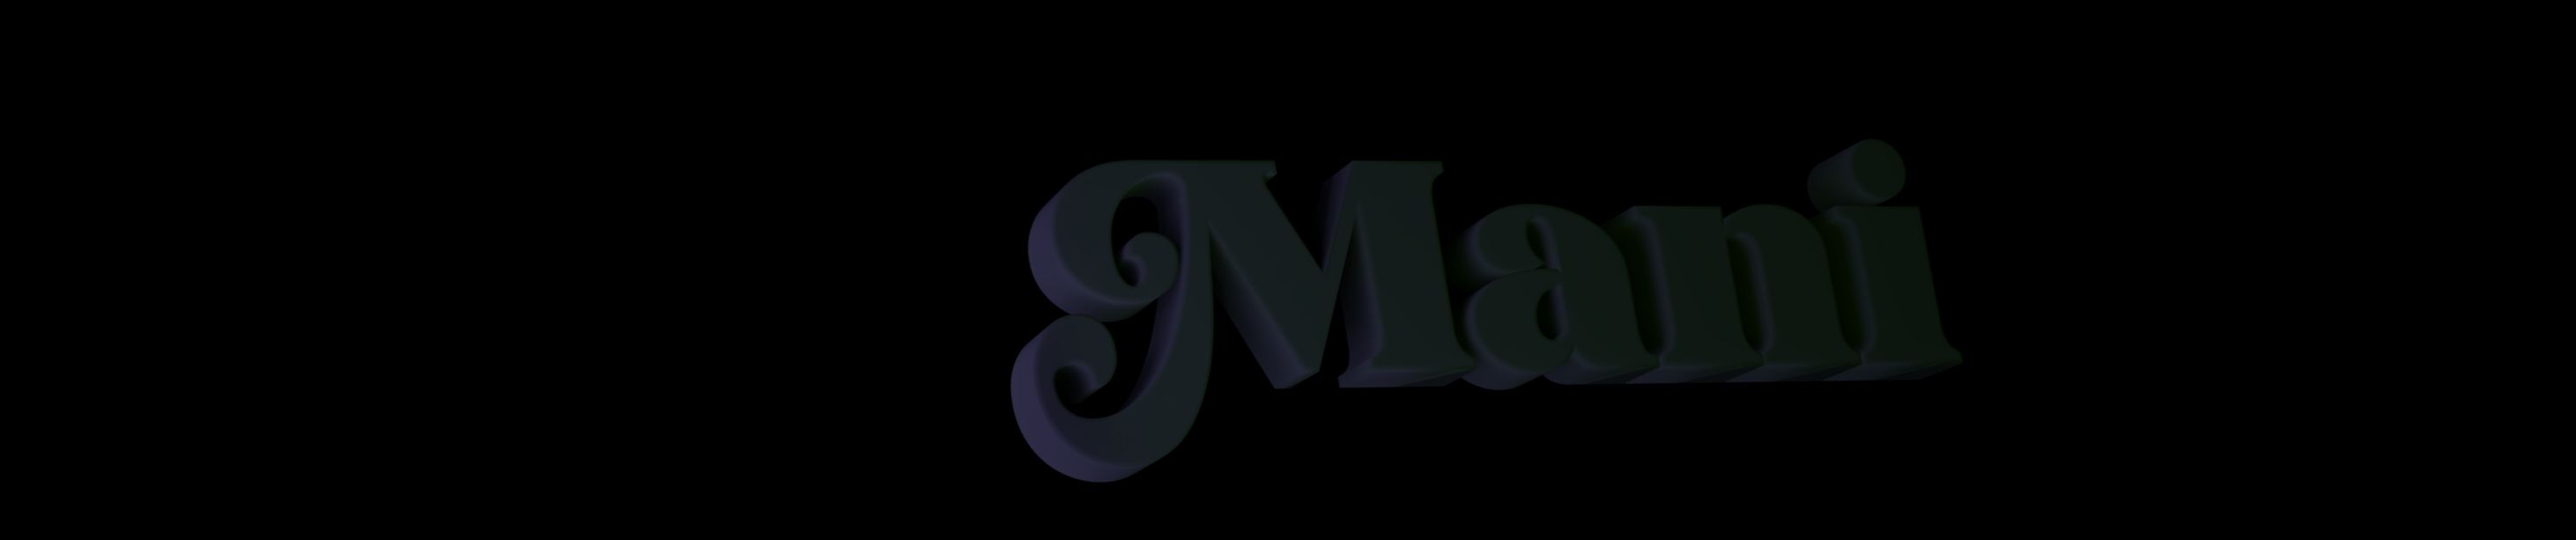 Mani Logo PNG Transparent & SVG Vector - Freebie Supply